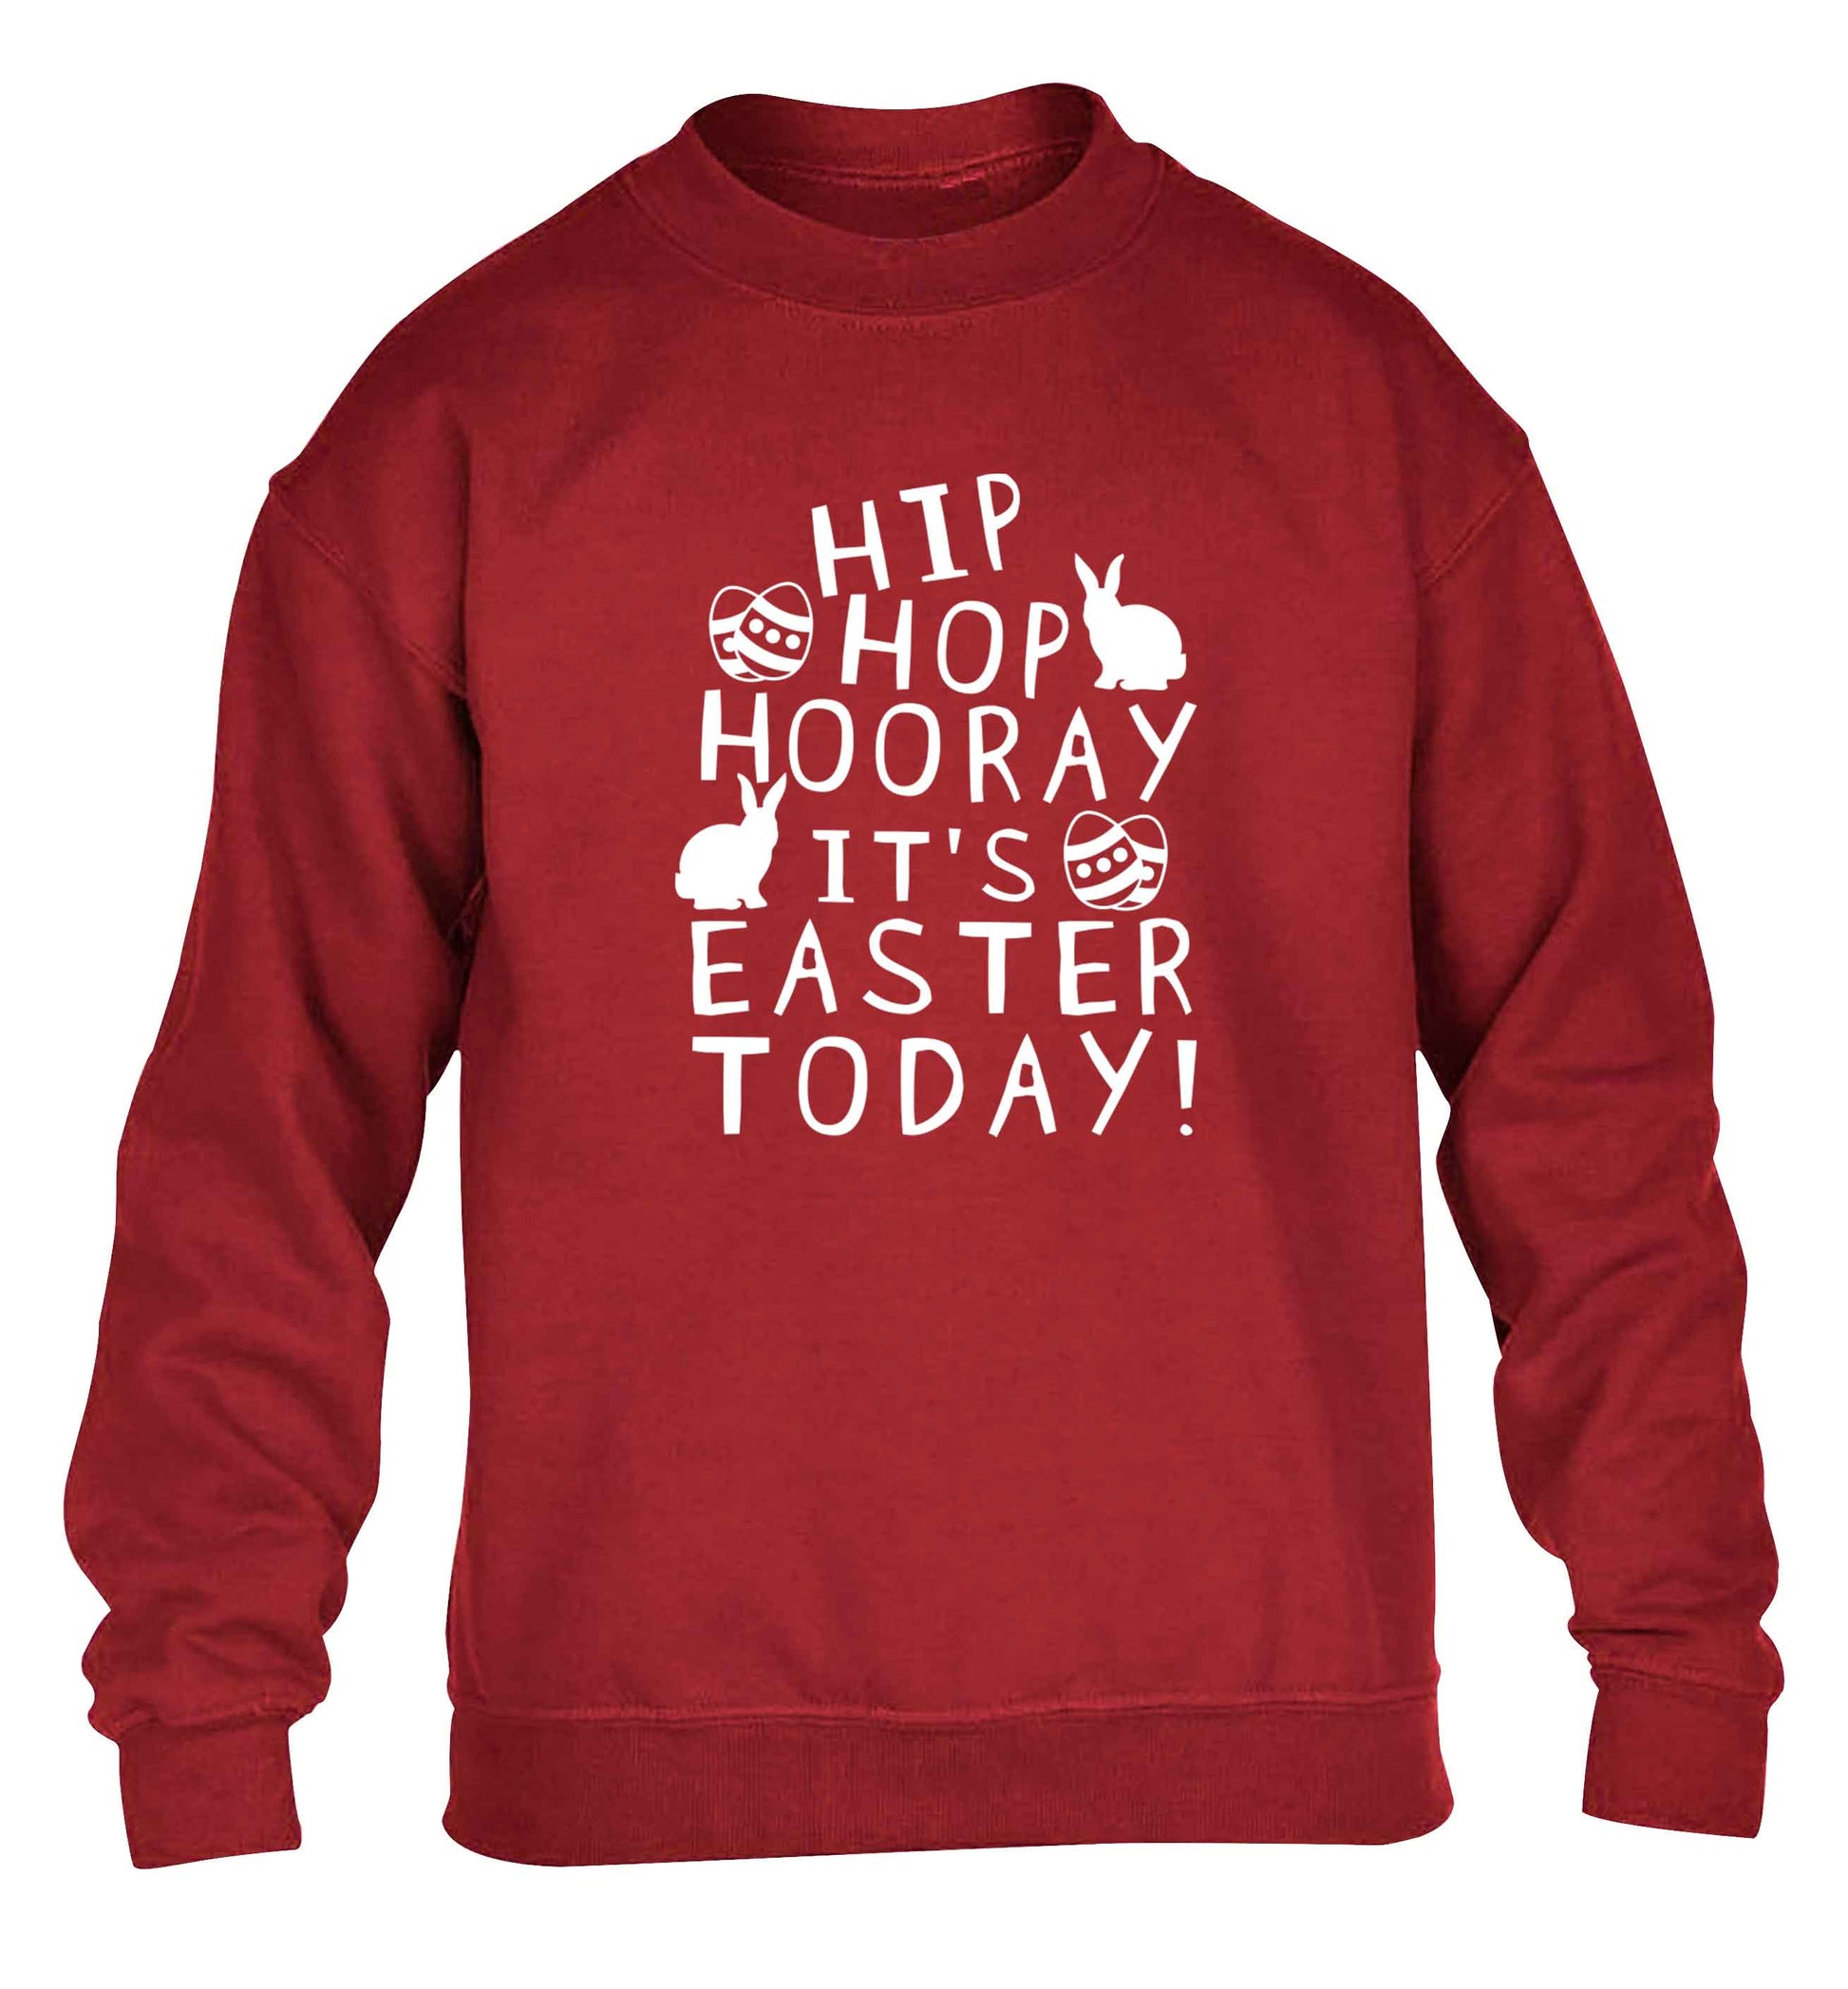 Hip hip hooray it's Easter today! children's grey sweater 12-13 Years